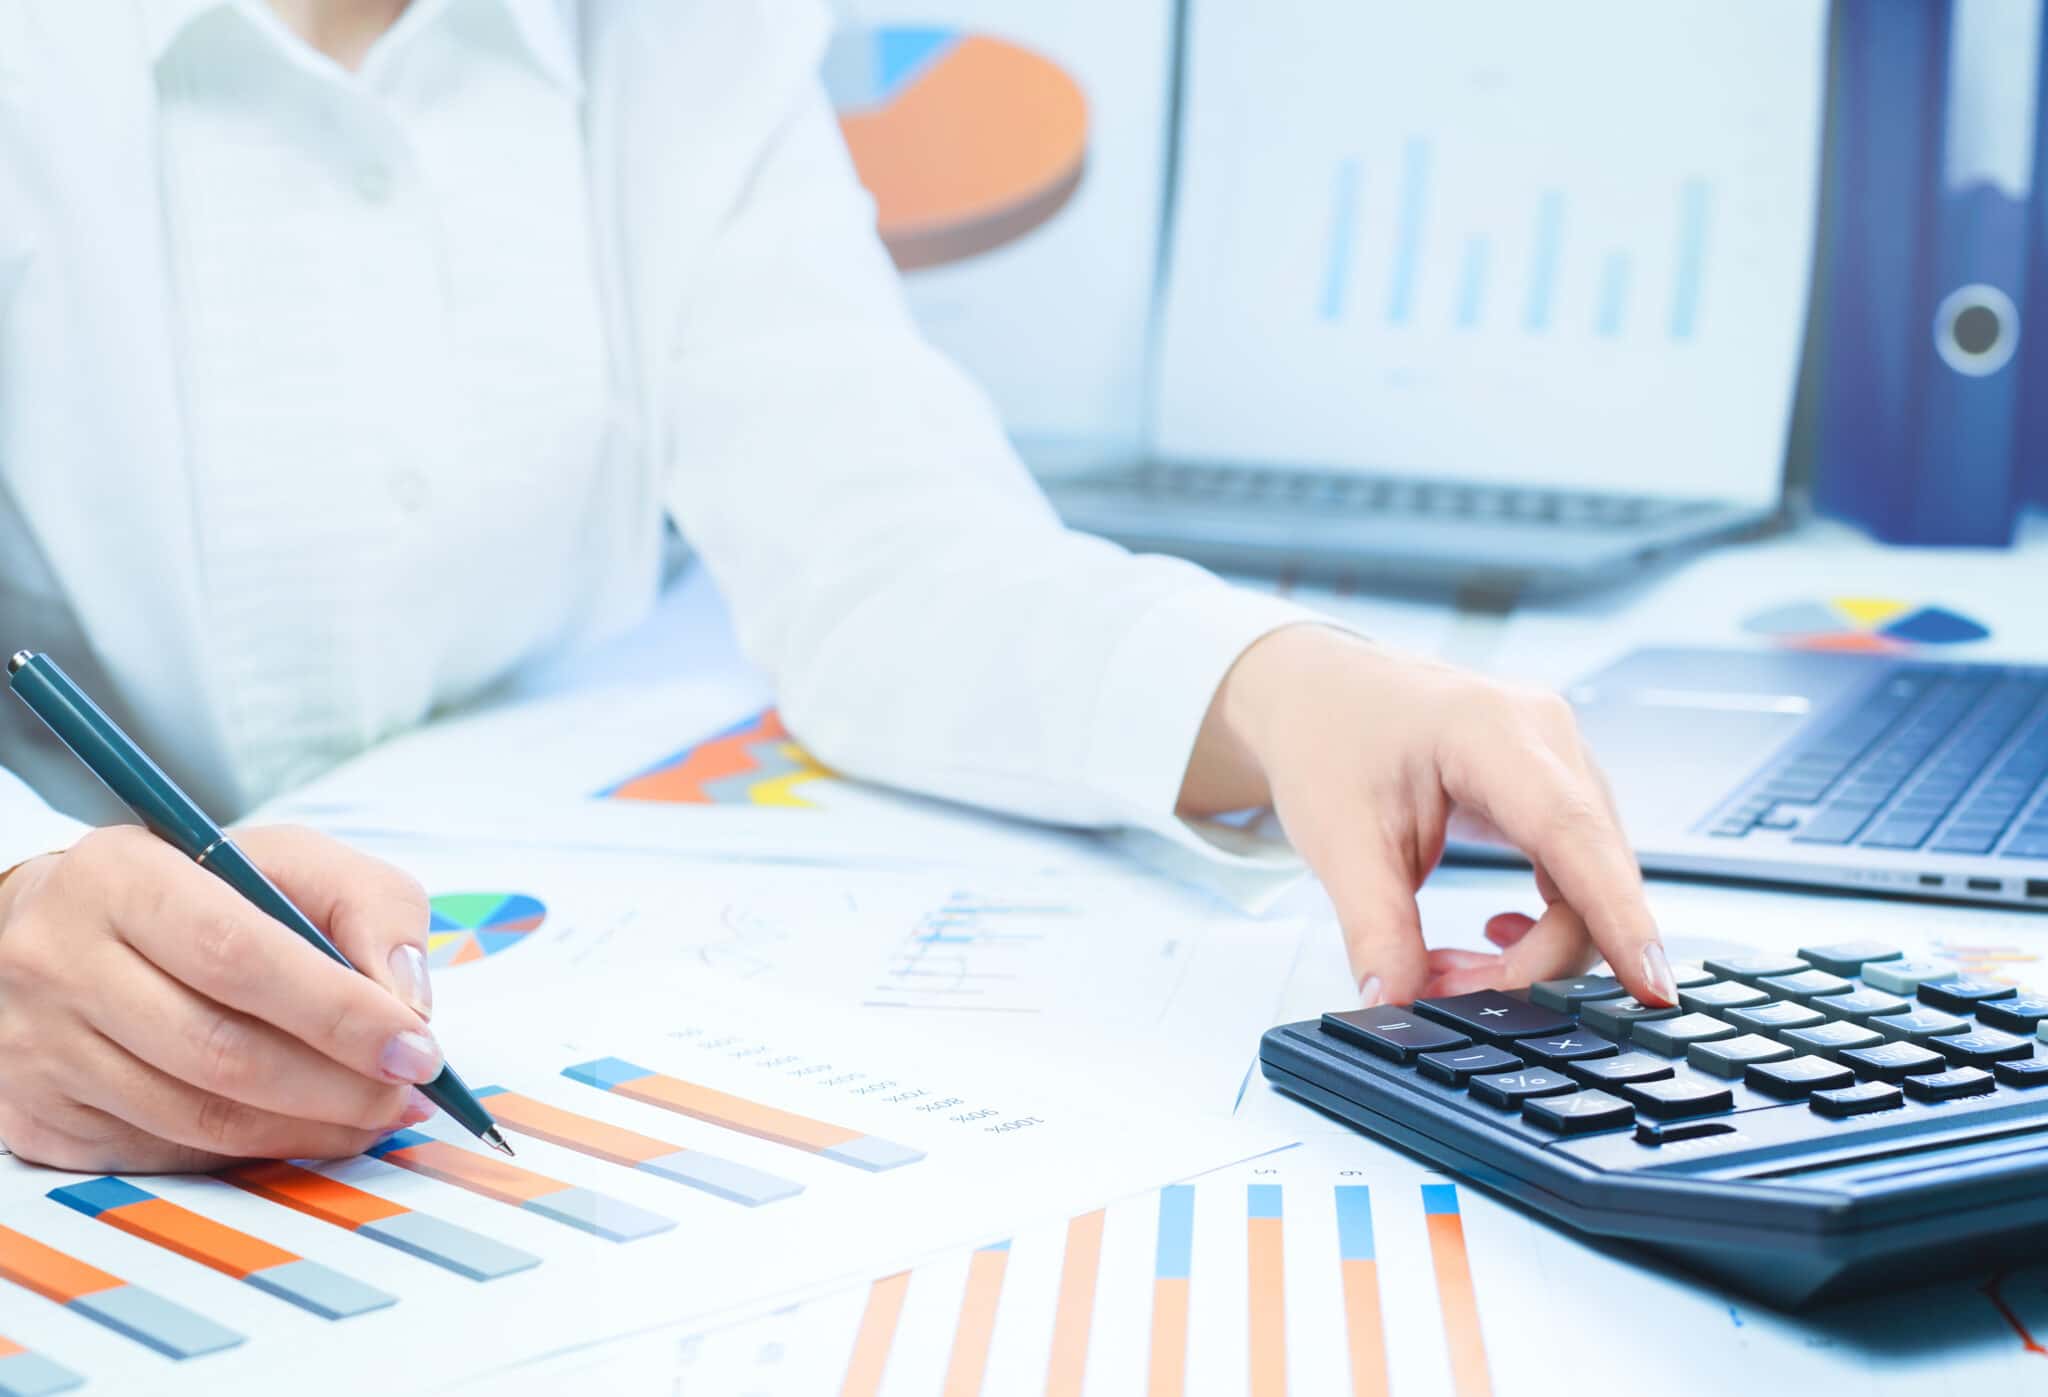 Accounting and financial models and graphs during tax season